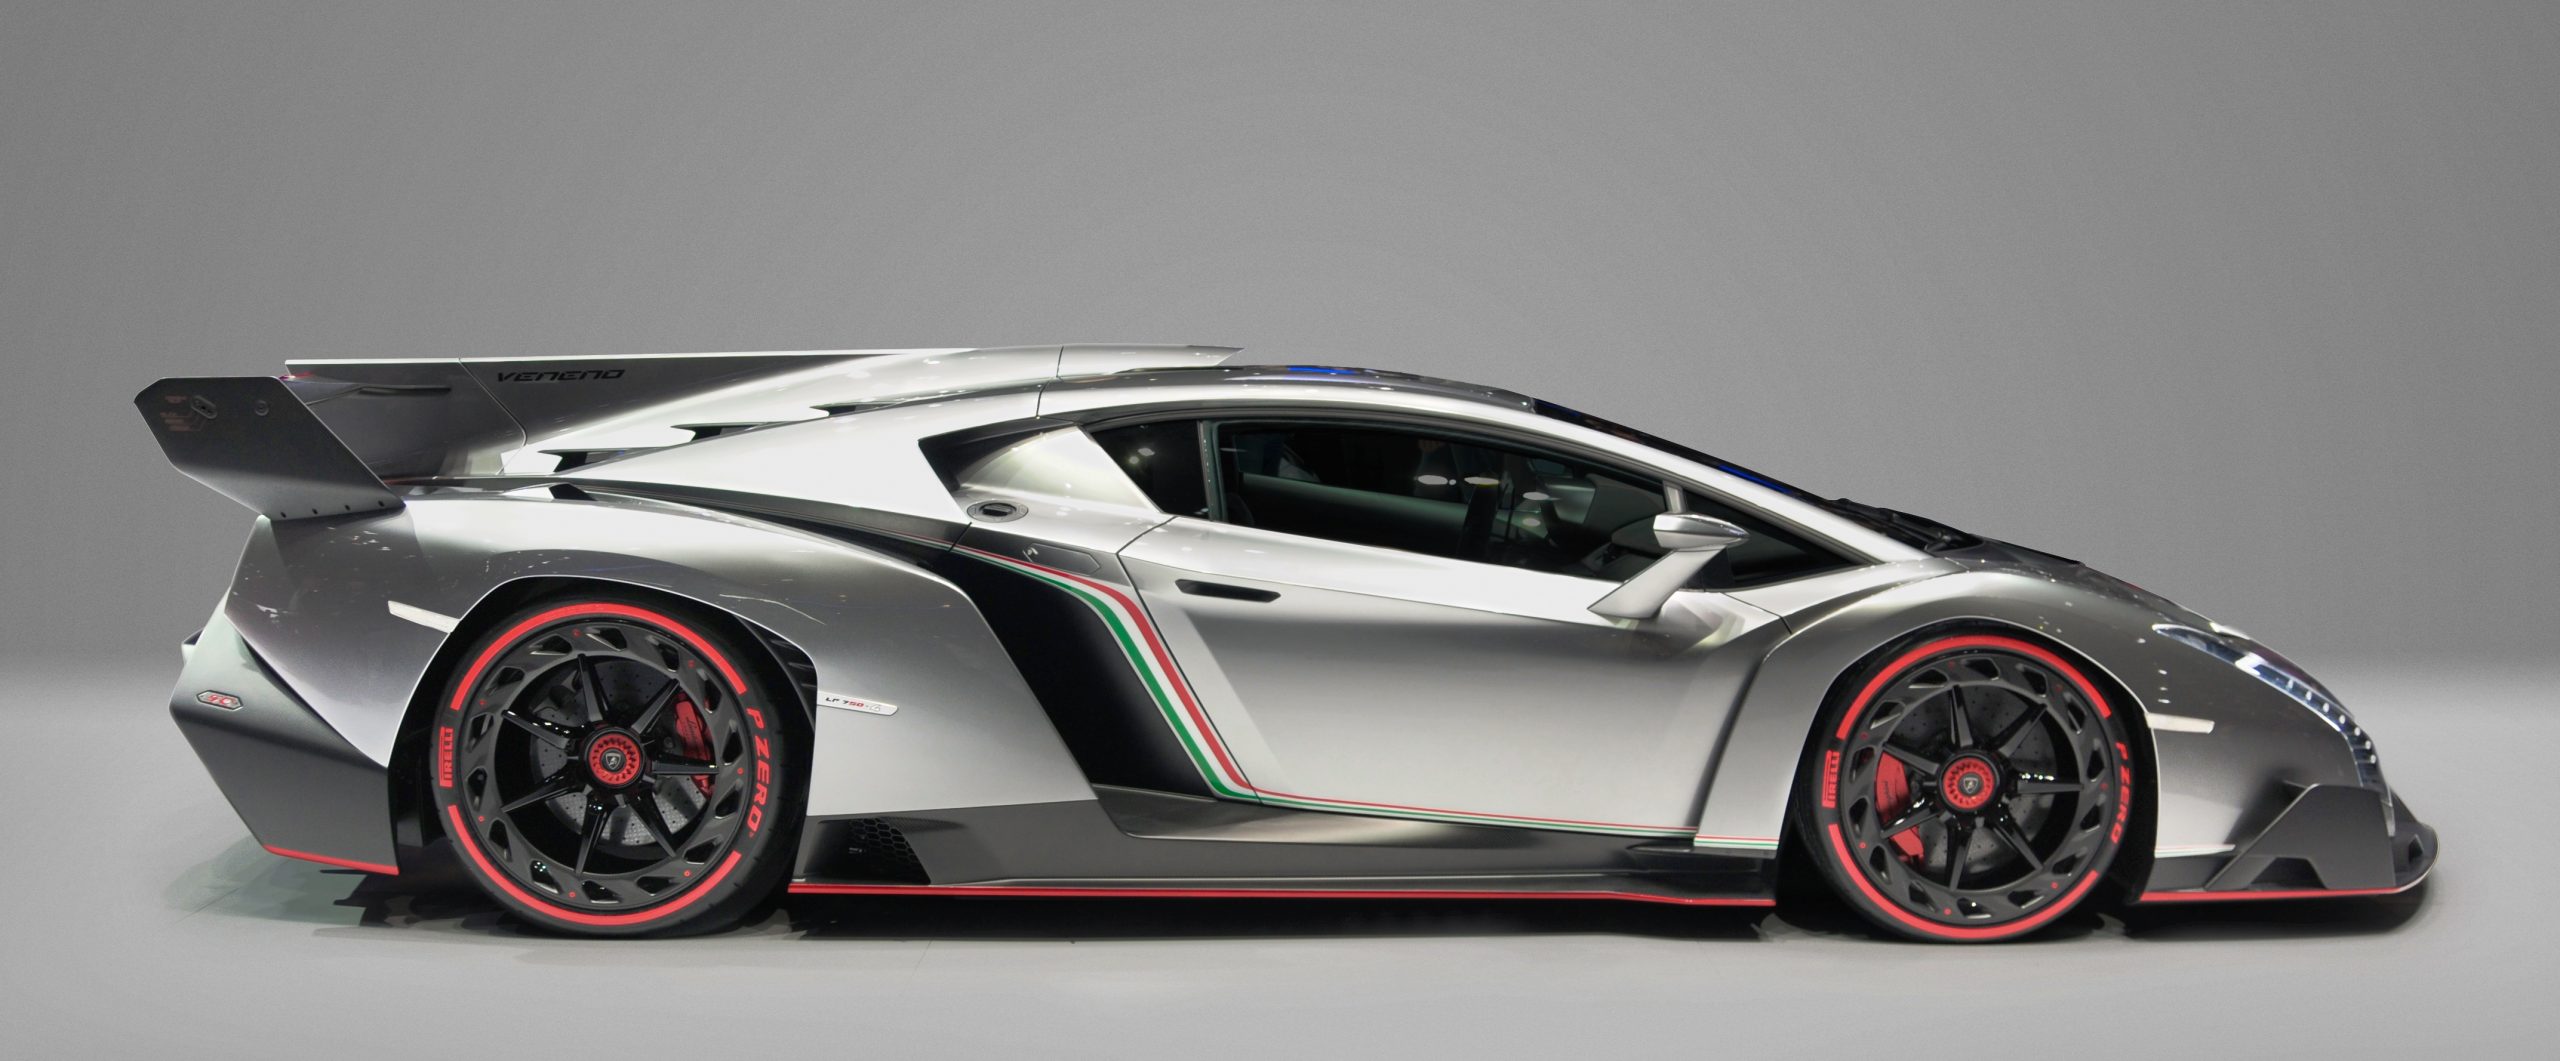 Lamborghini Veneno, une voiture hors du commun